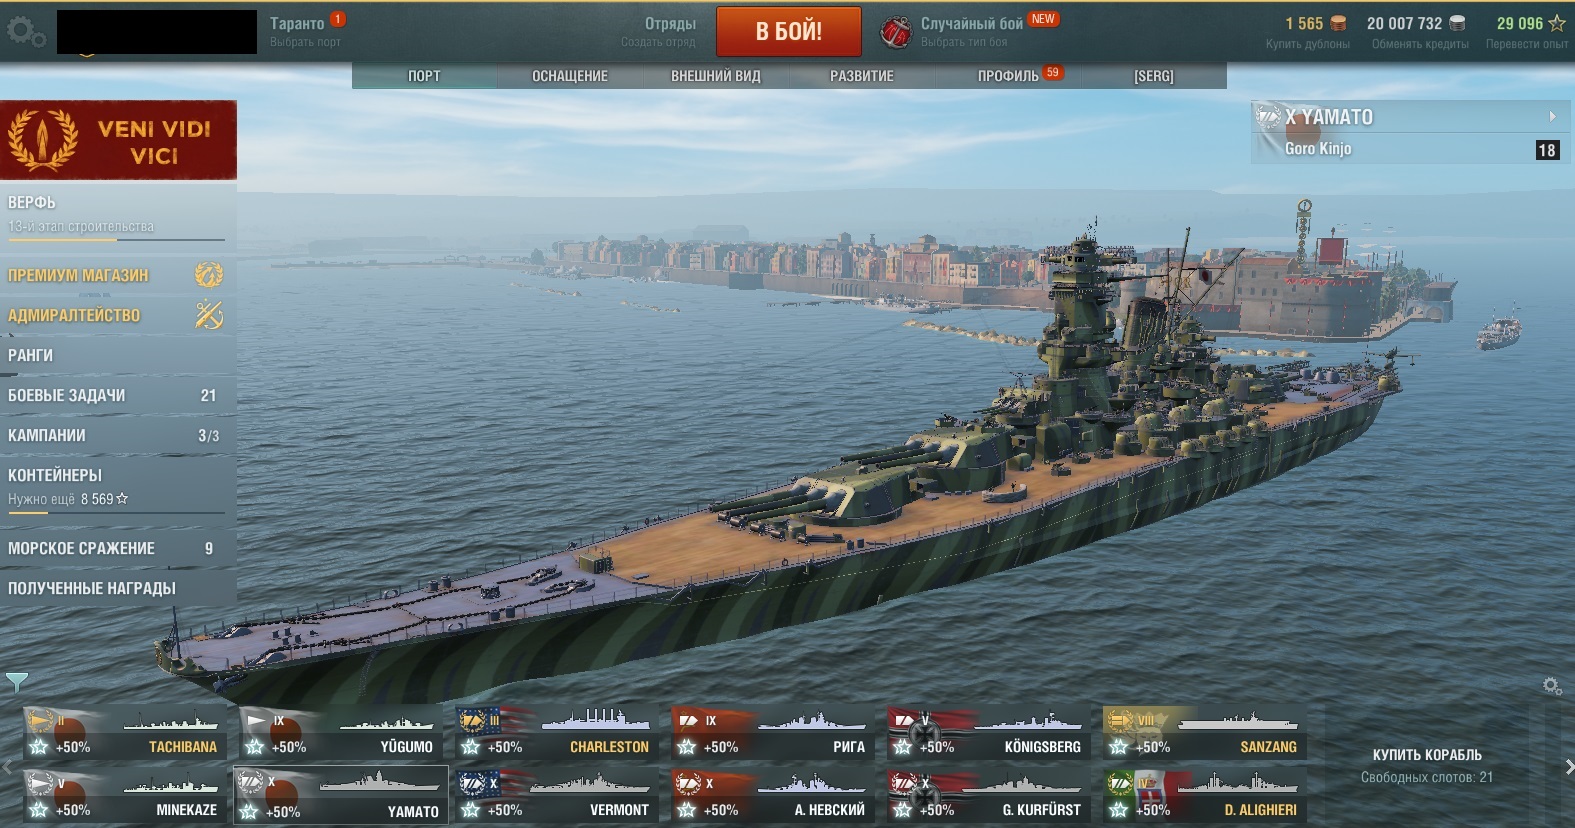 Аккаунт World of Warships 53% 1к боев 7 топов скриншот